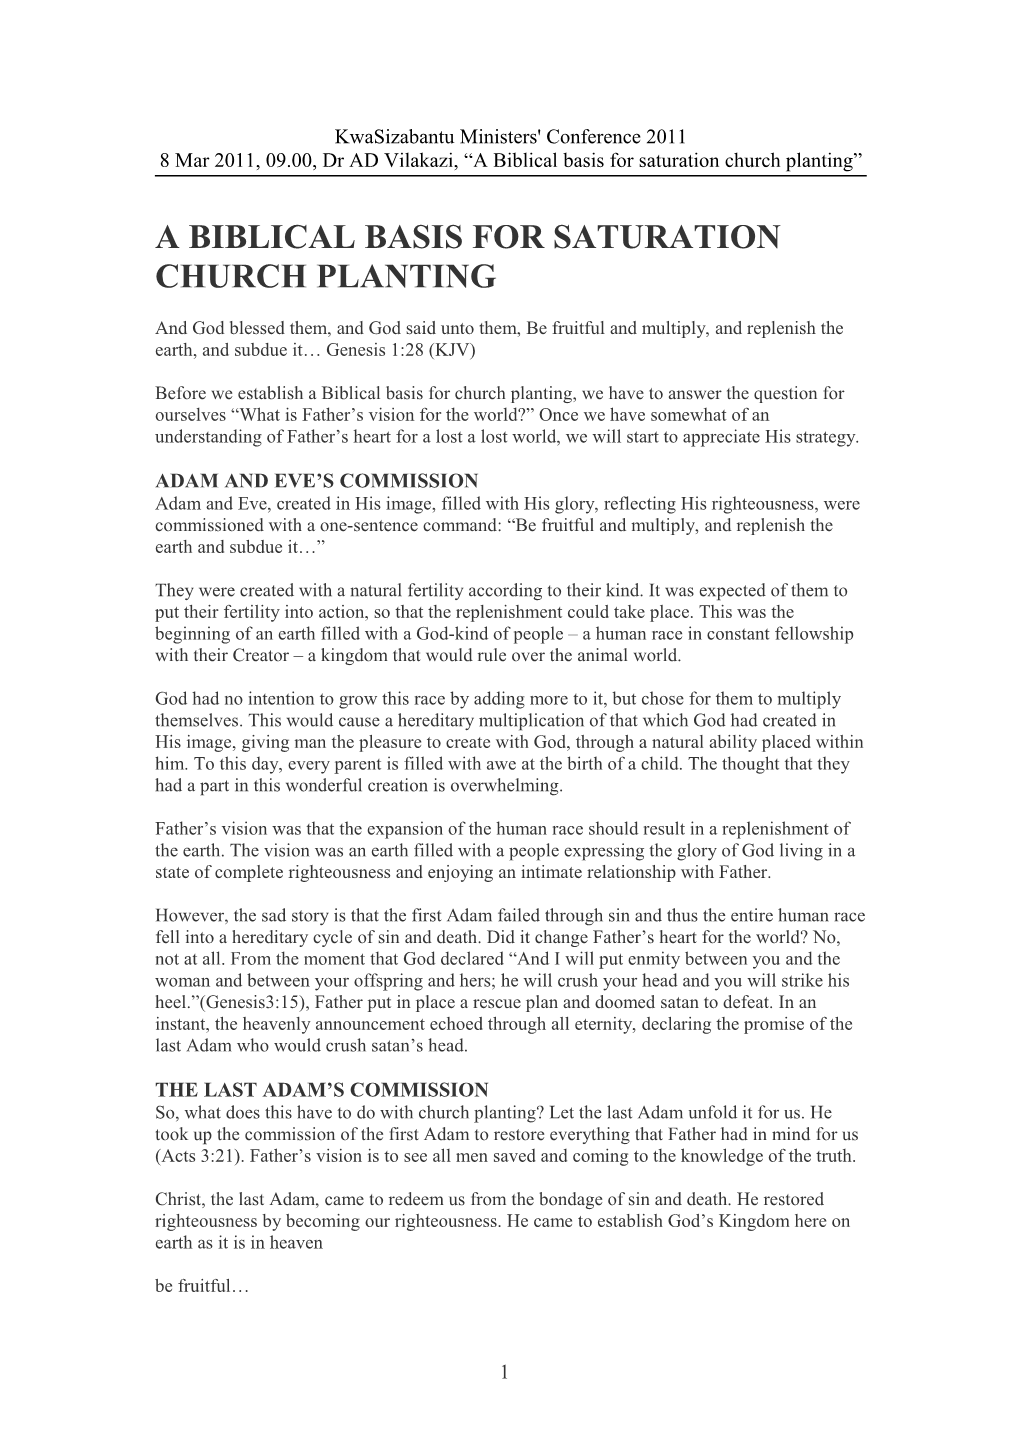 A Biblical Basis for Saturation Church Planting